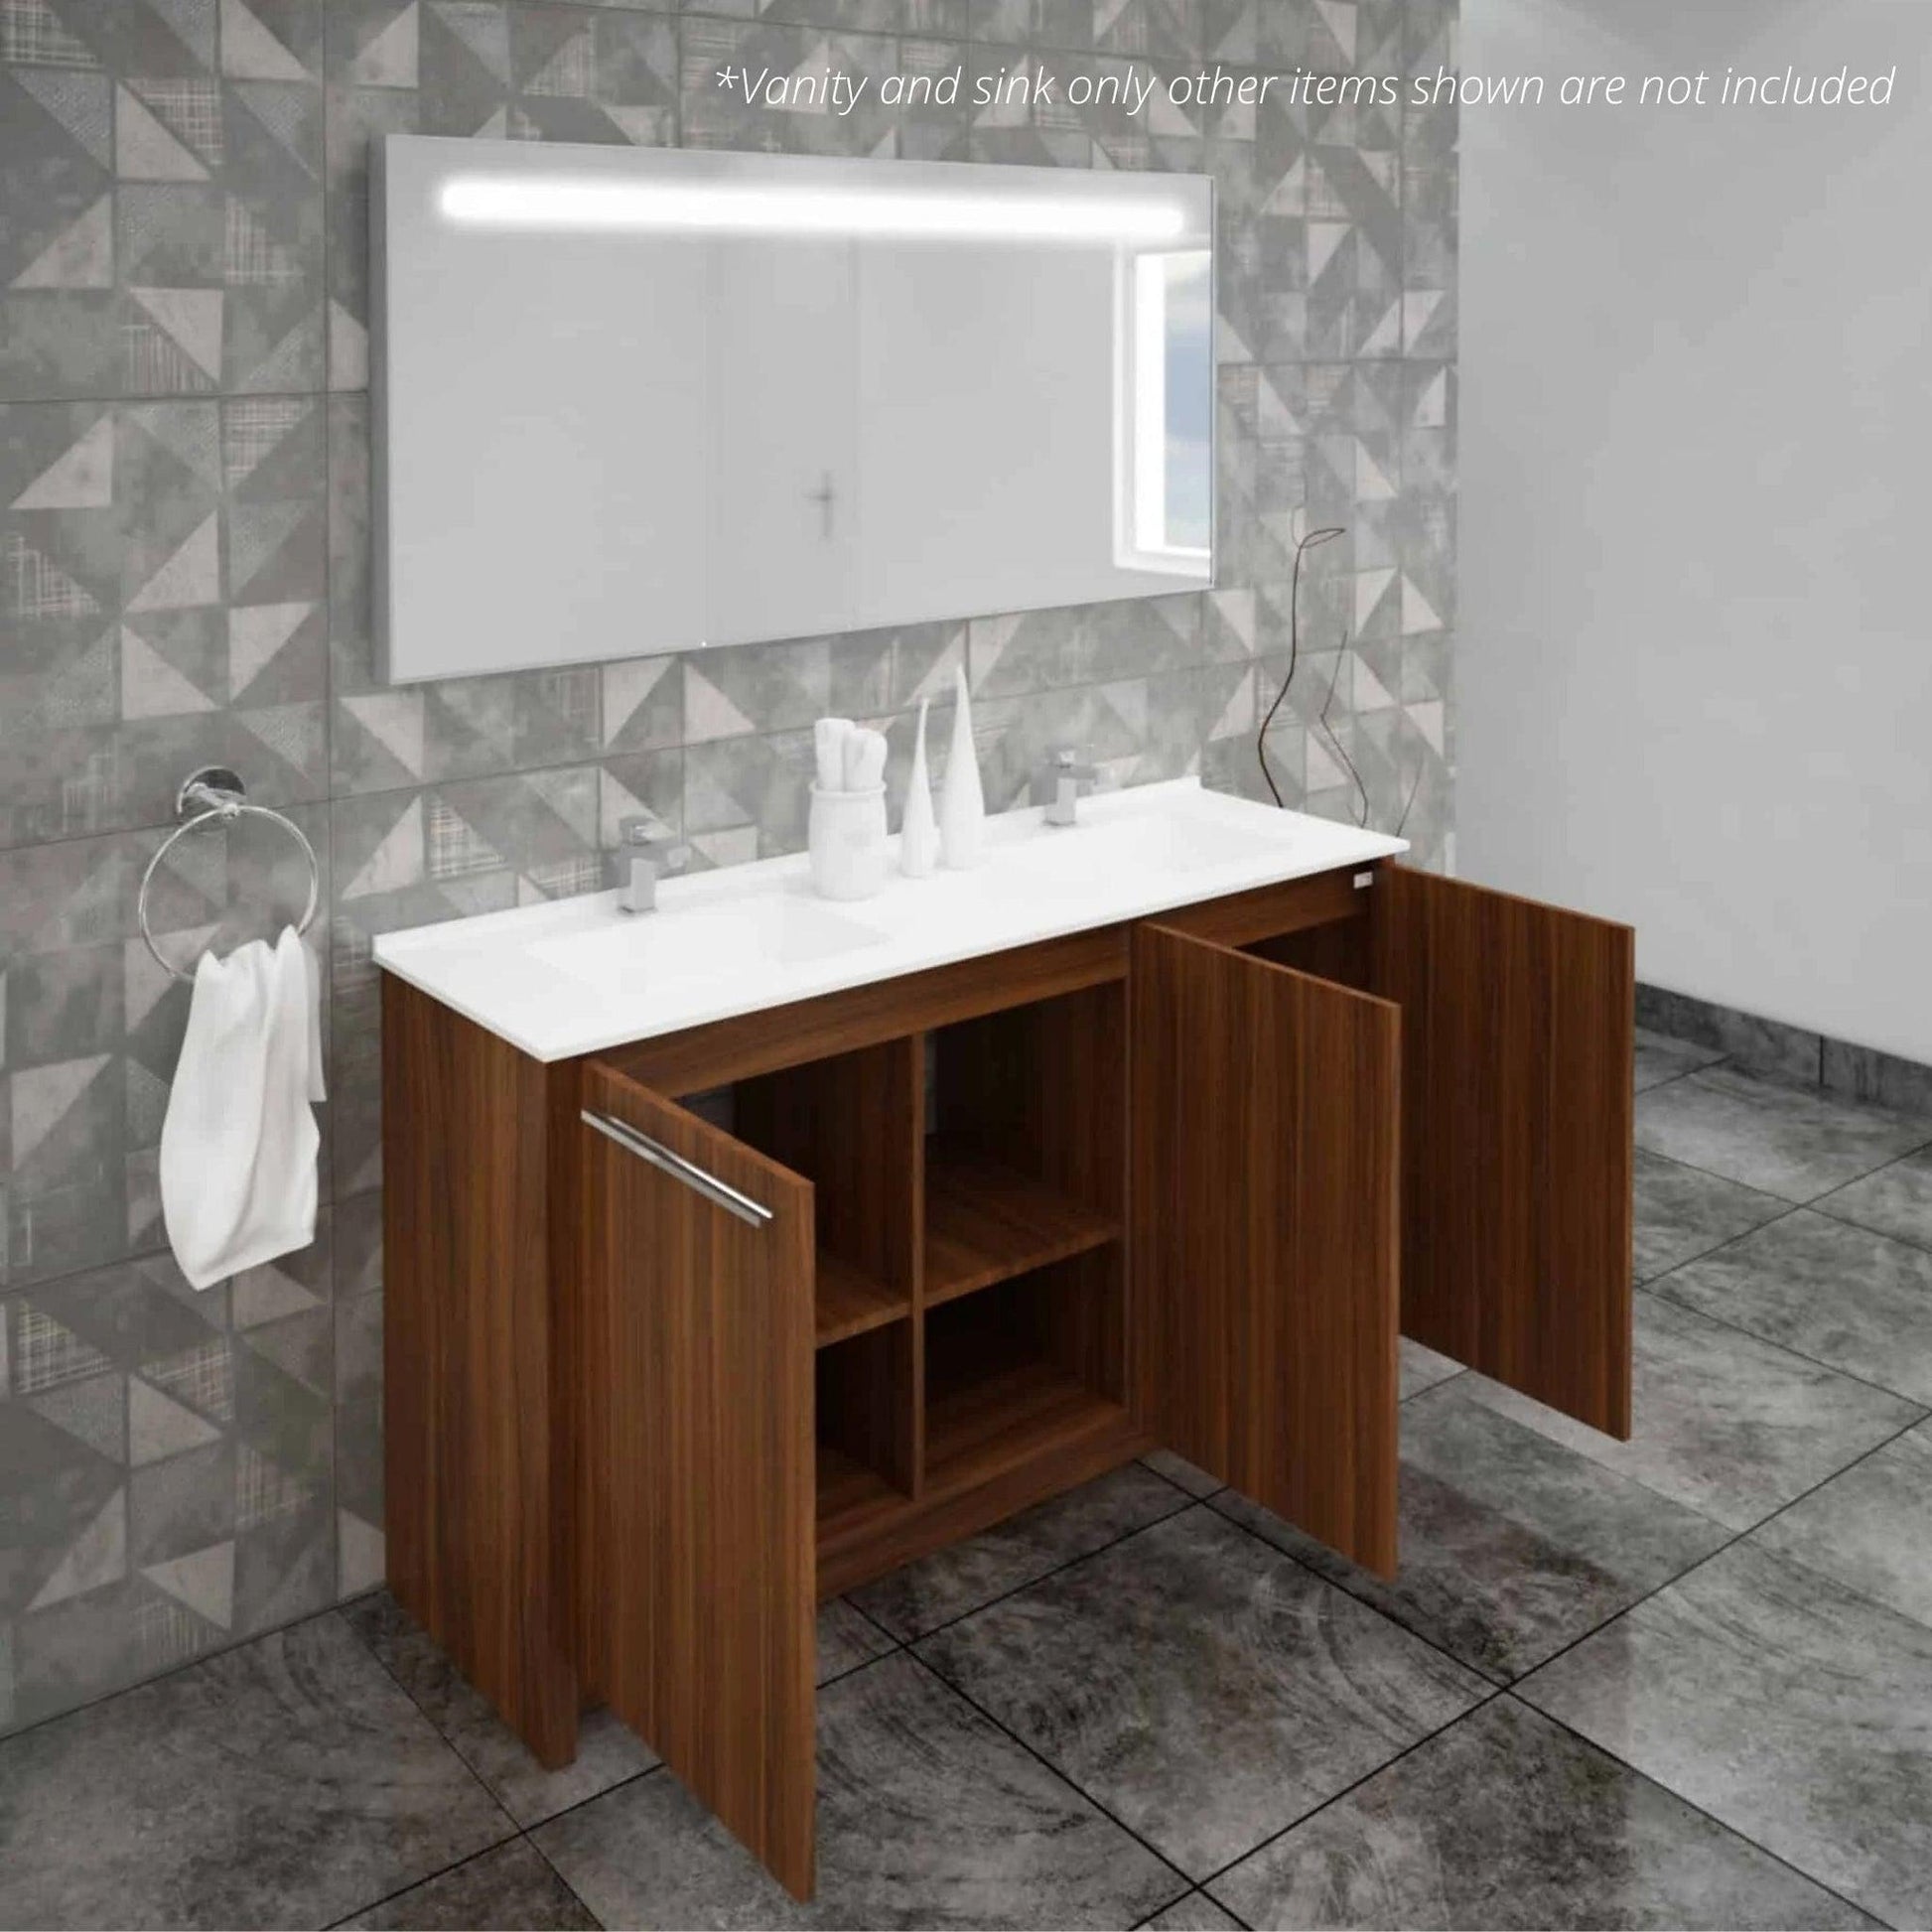 Casa Mare Benna 63" Matte Walnut Bathroom Vanity and Acrylic Double Sink Combo